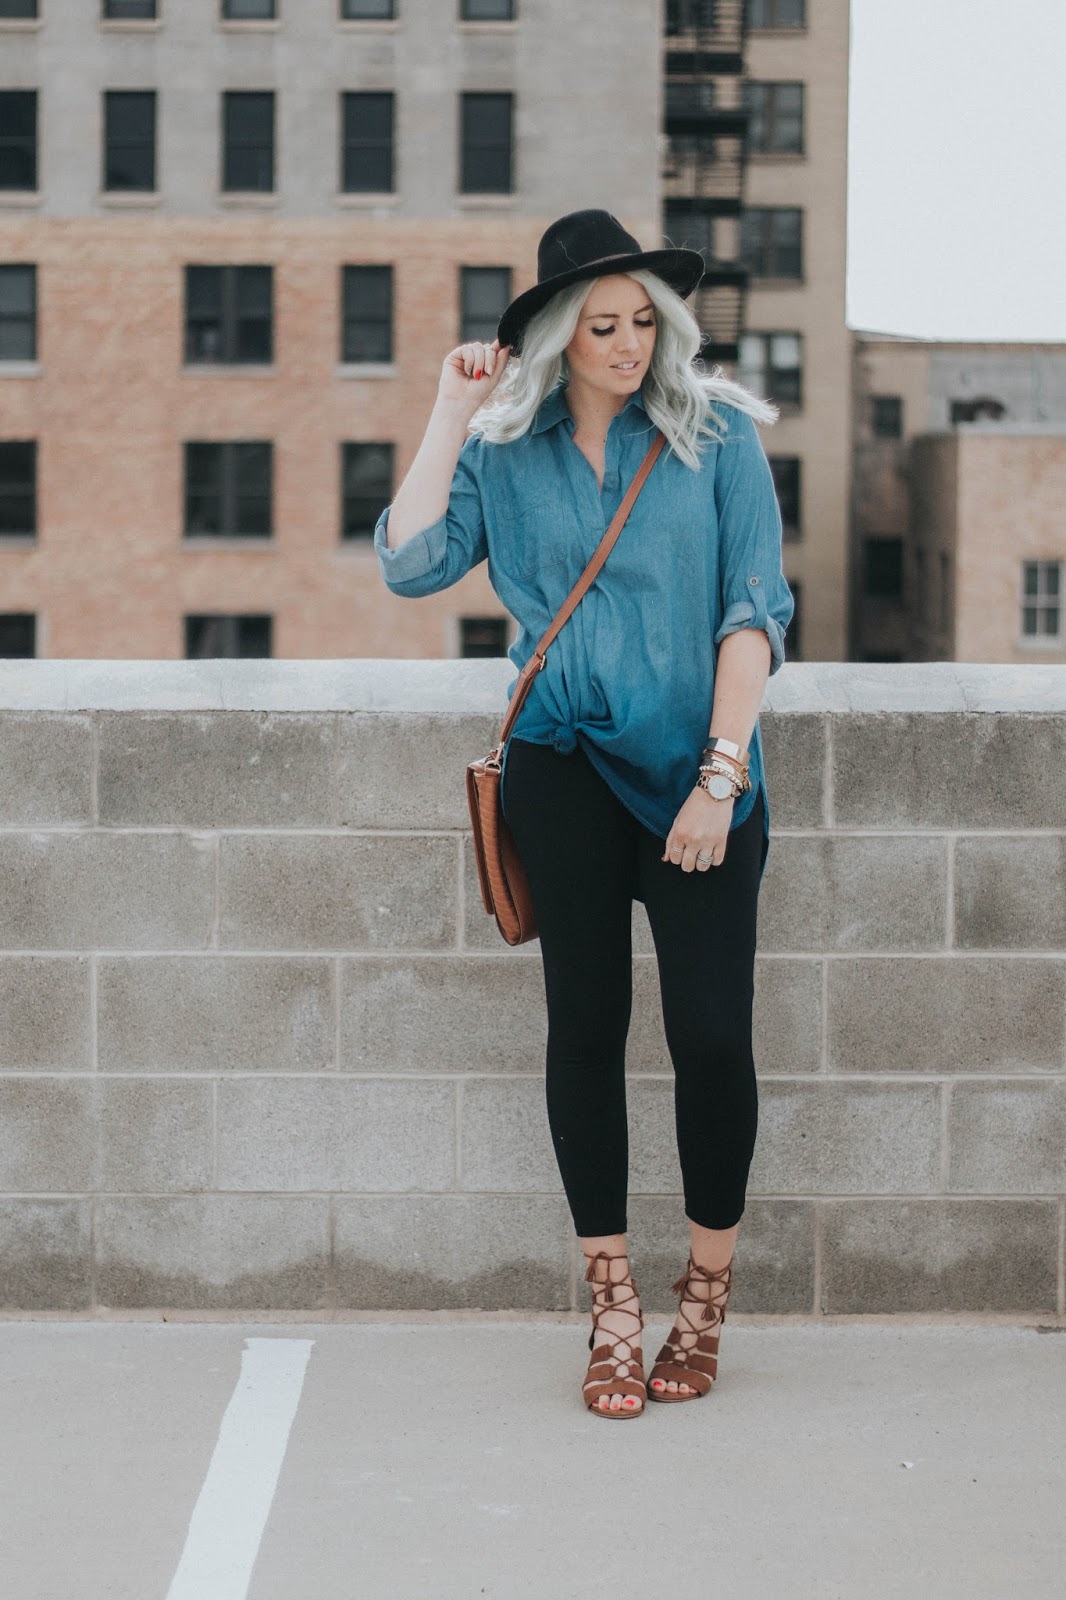 Shop Goldies, Utah Fashion Blogger, Spring Outfit